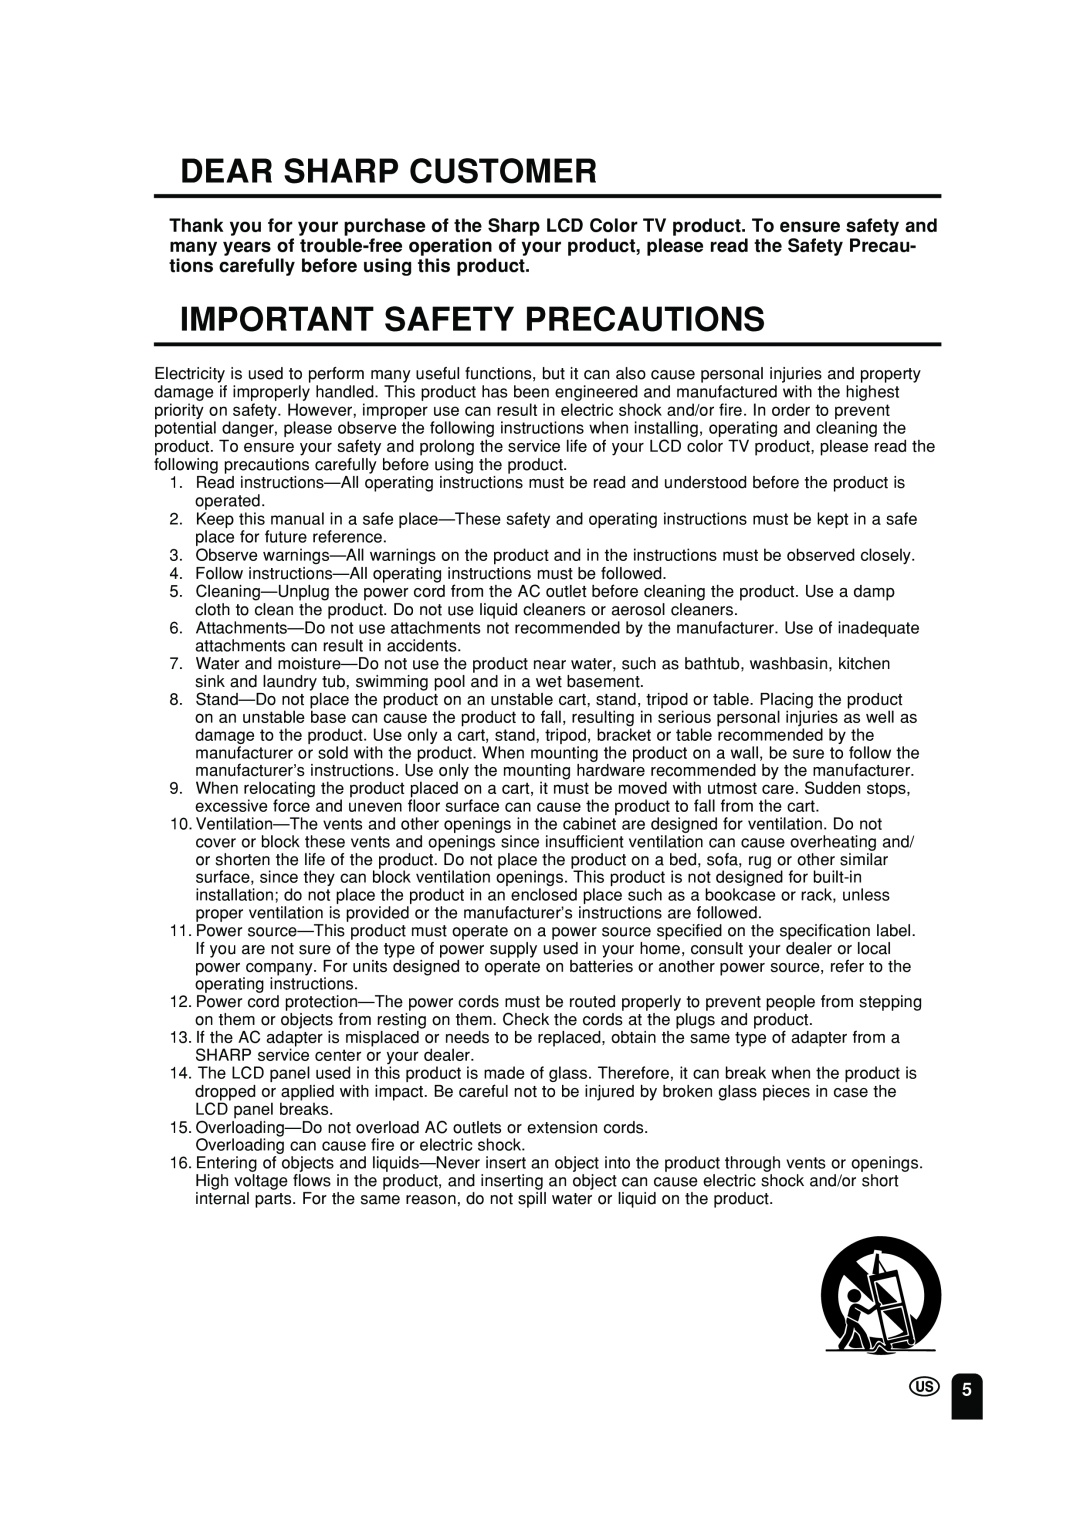 Sharp LC 10A2U operation manual Dear Sharp Customer, Important Safety Precautions 